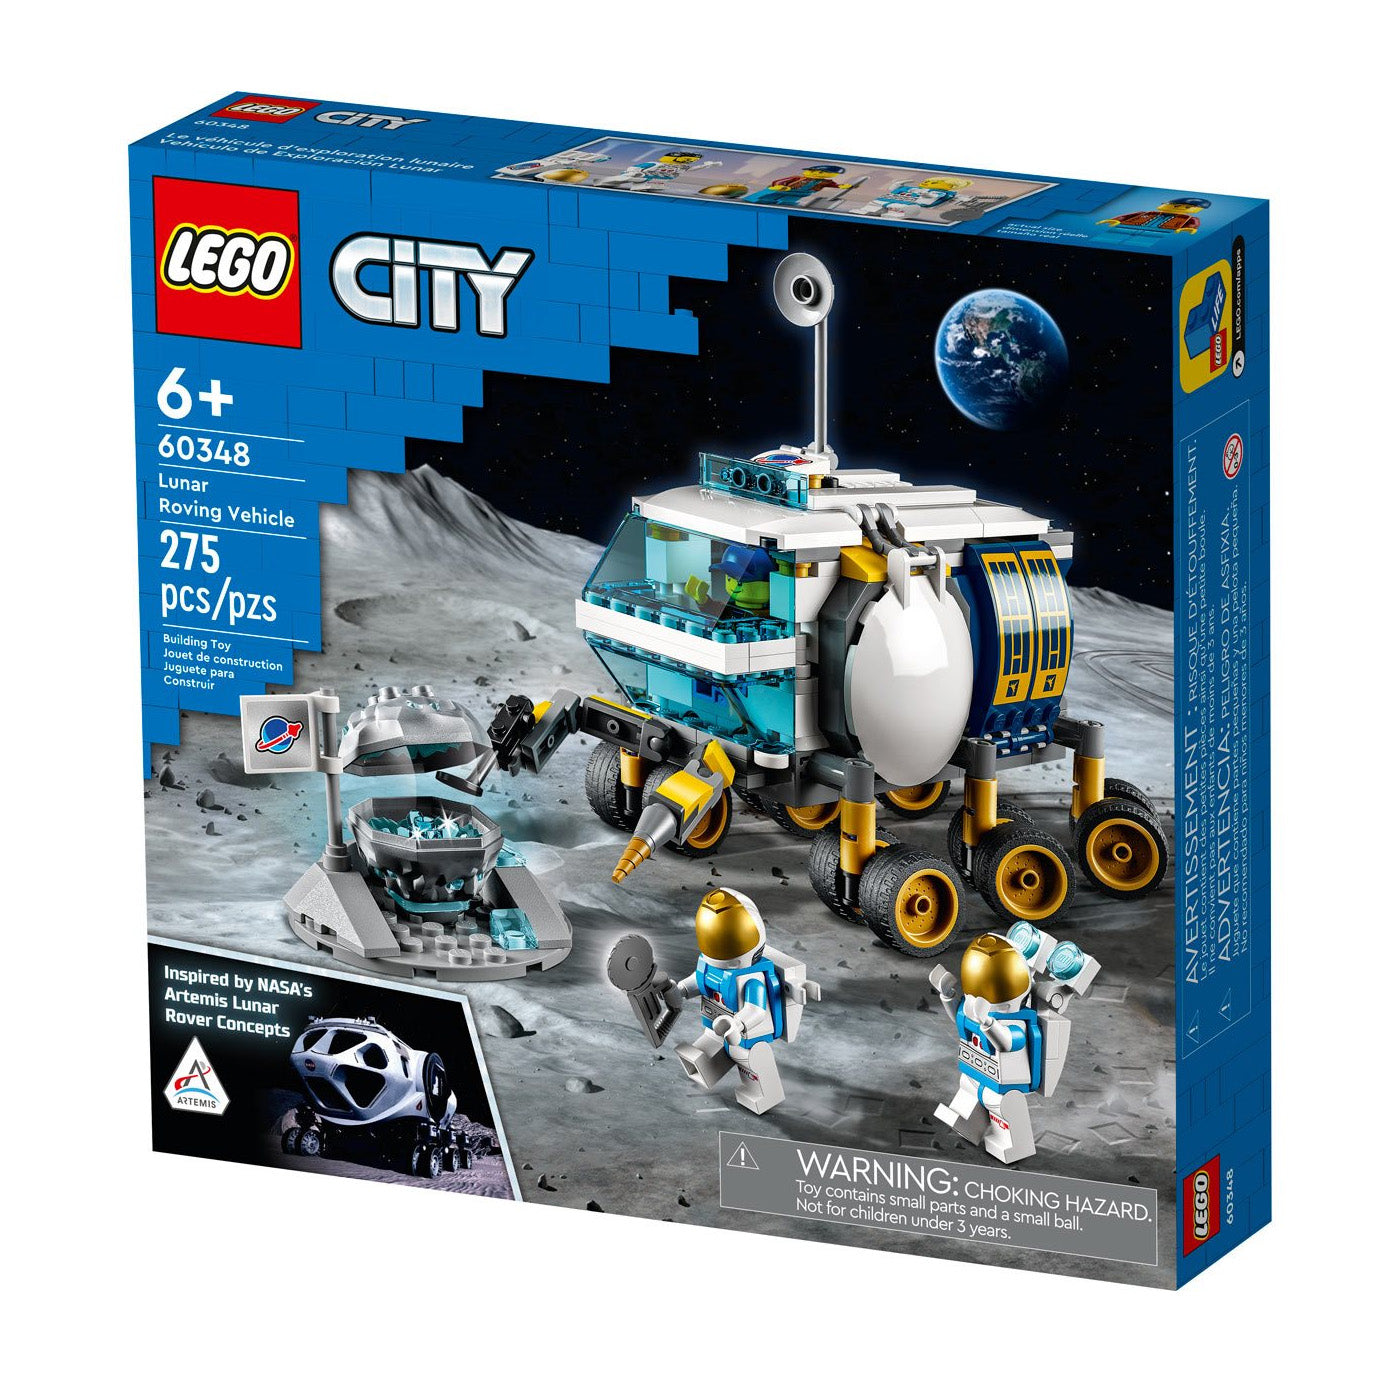 LEGO City: Lunar Roving Vehicle Set 60348